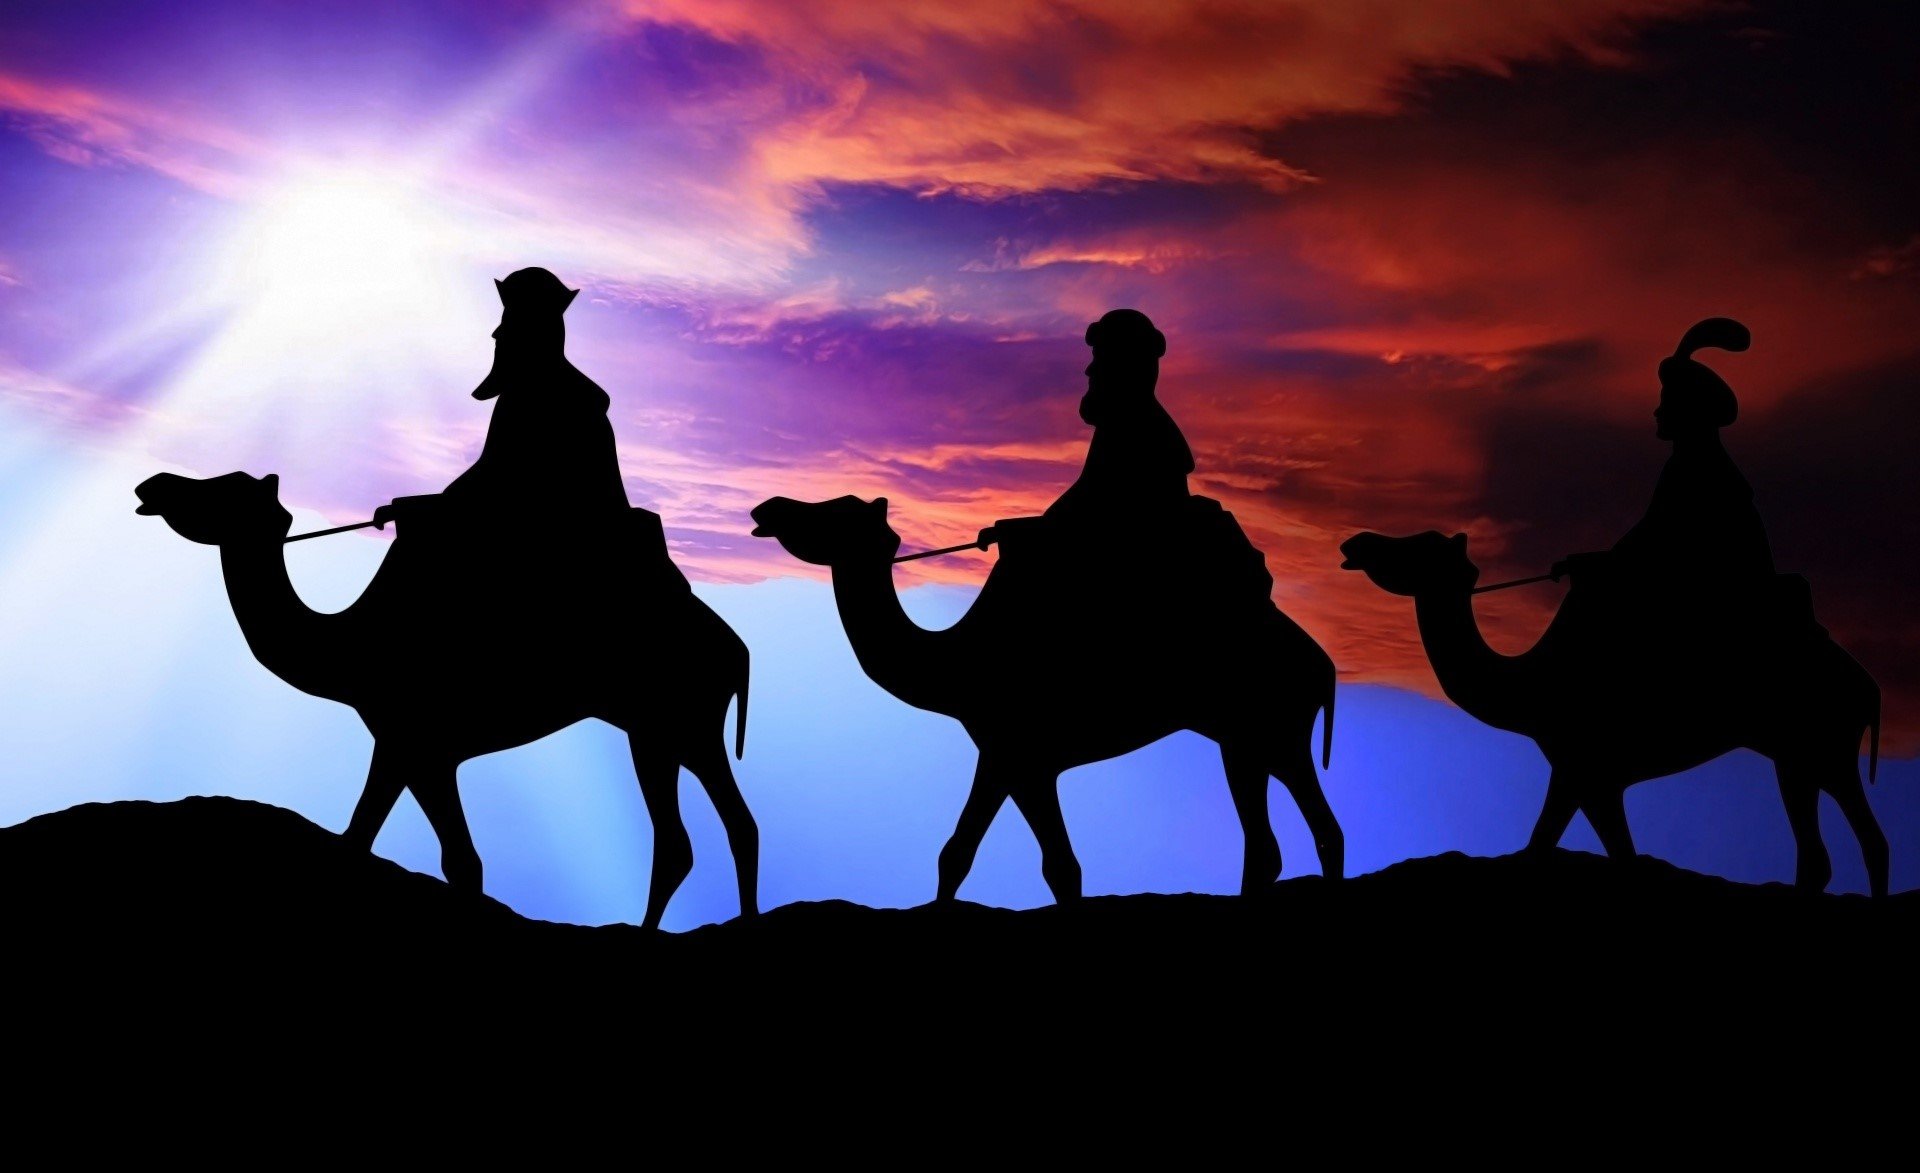 The three wizard kings following the biblical star of Bethlehem